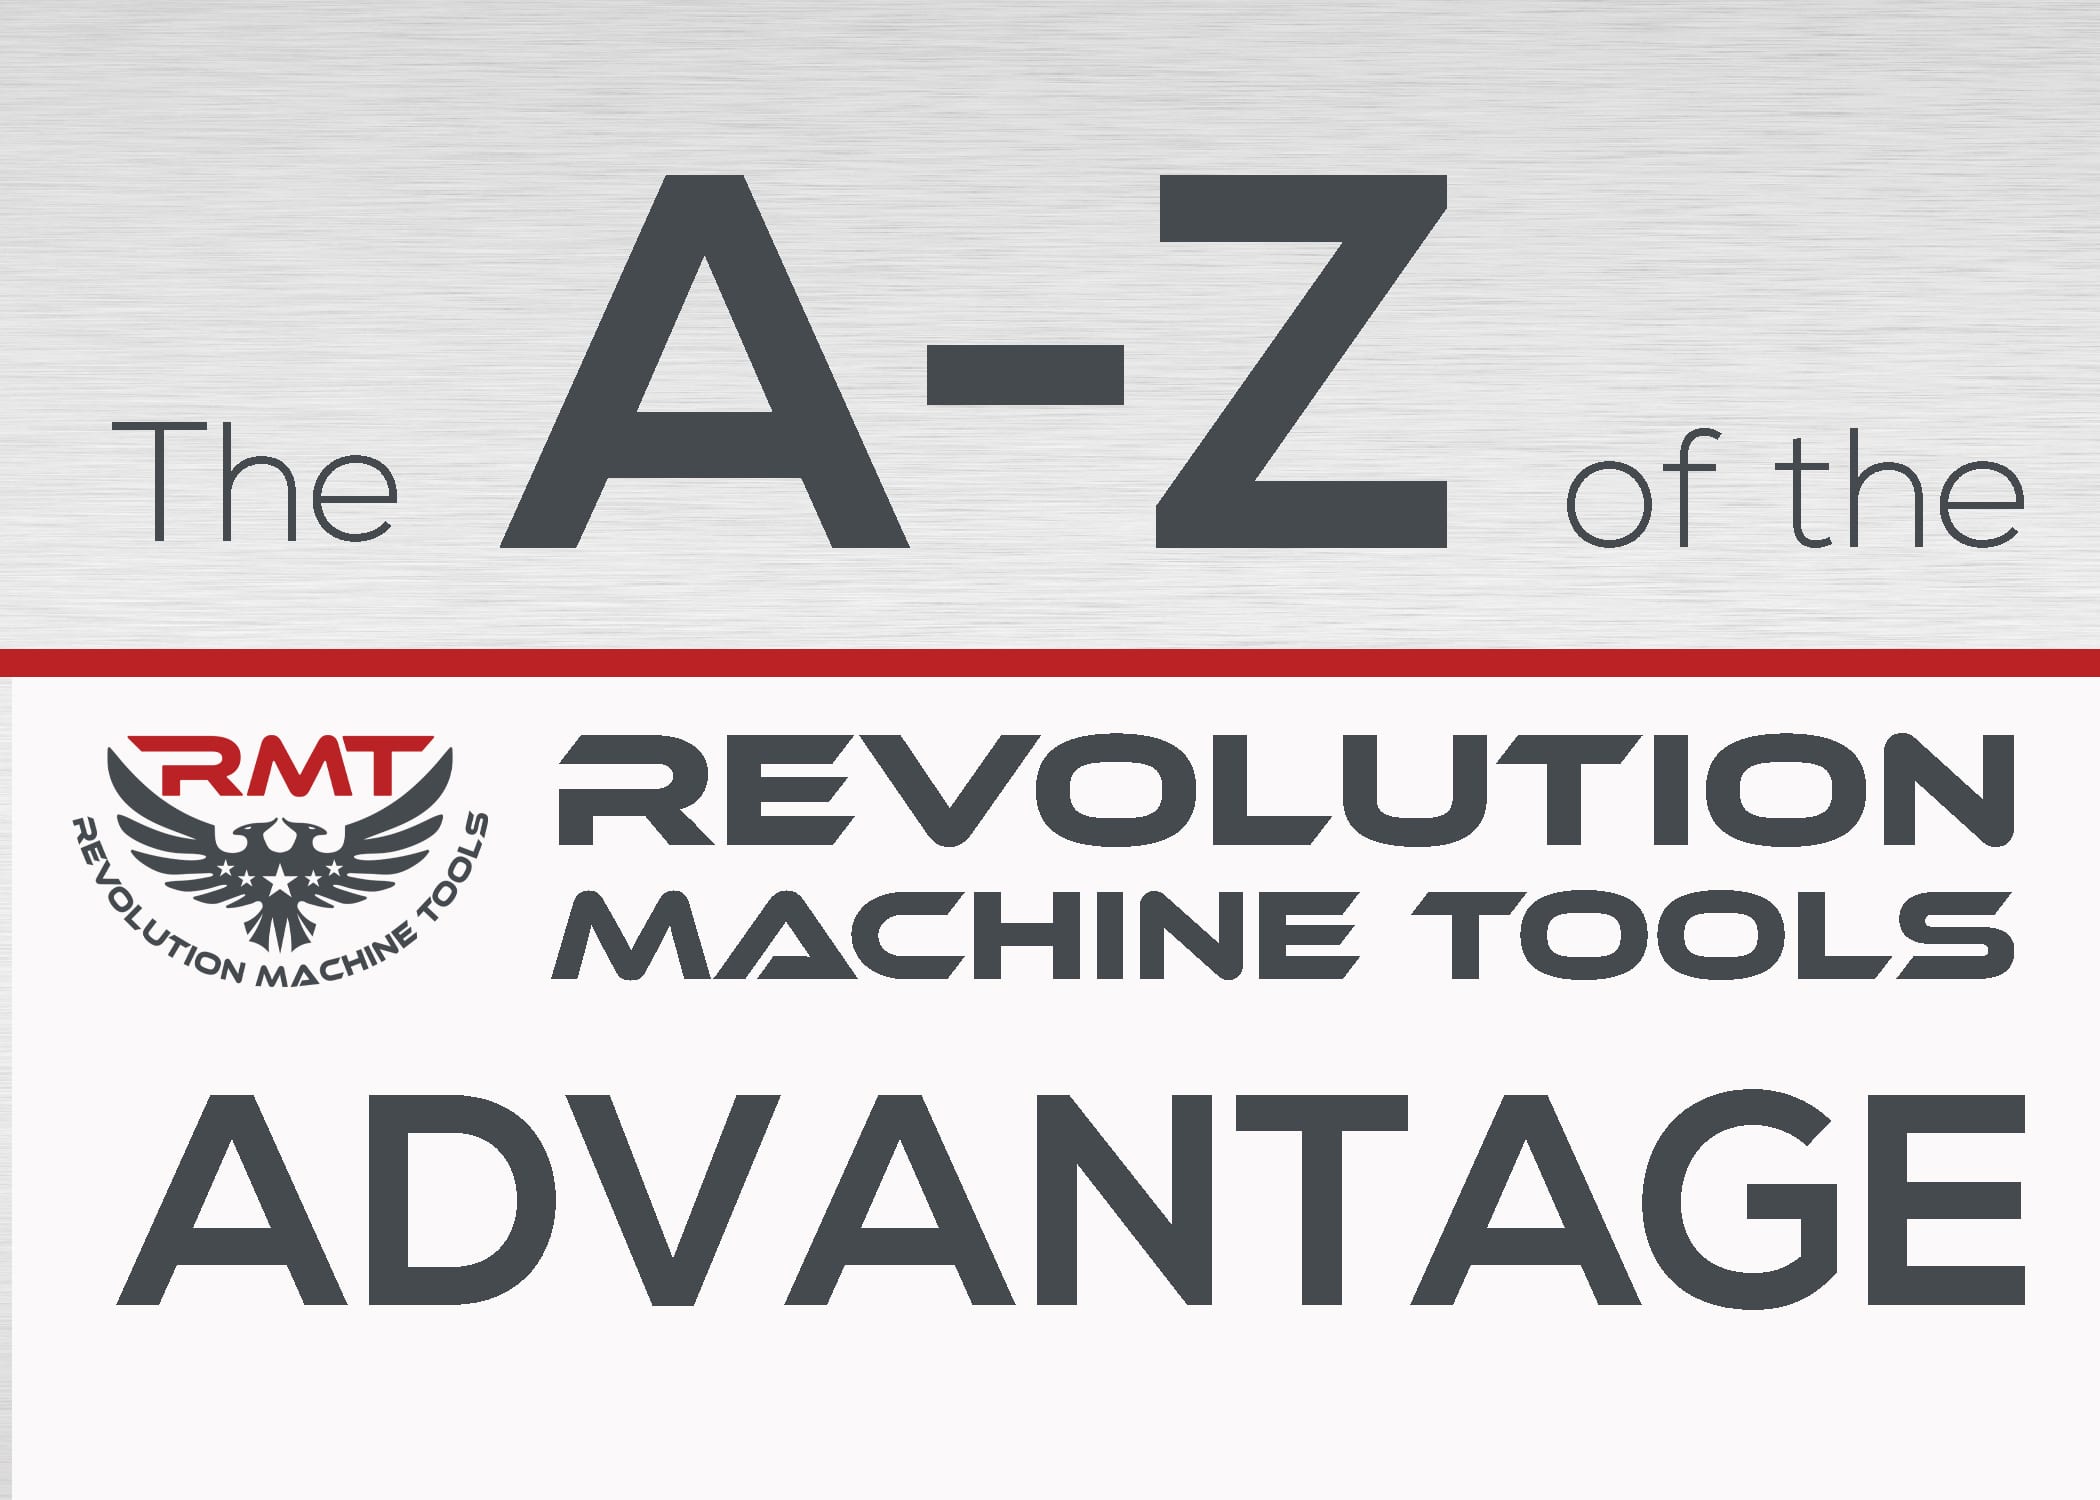 A-Z of RMT Advantage